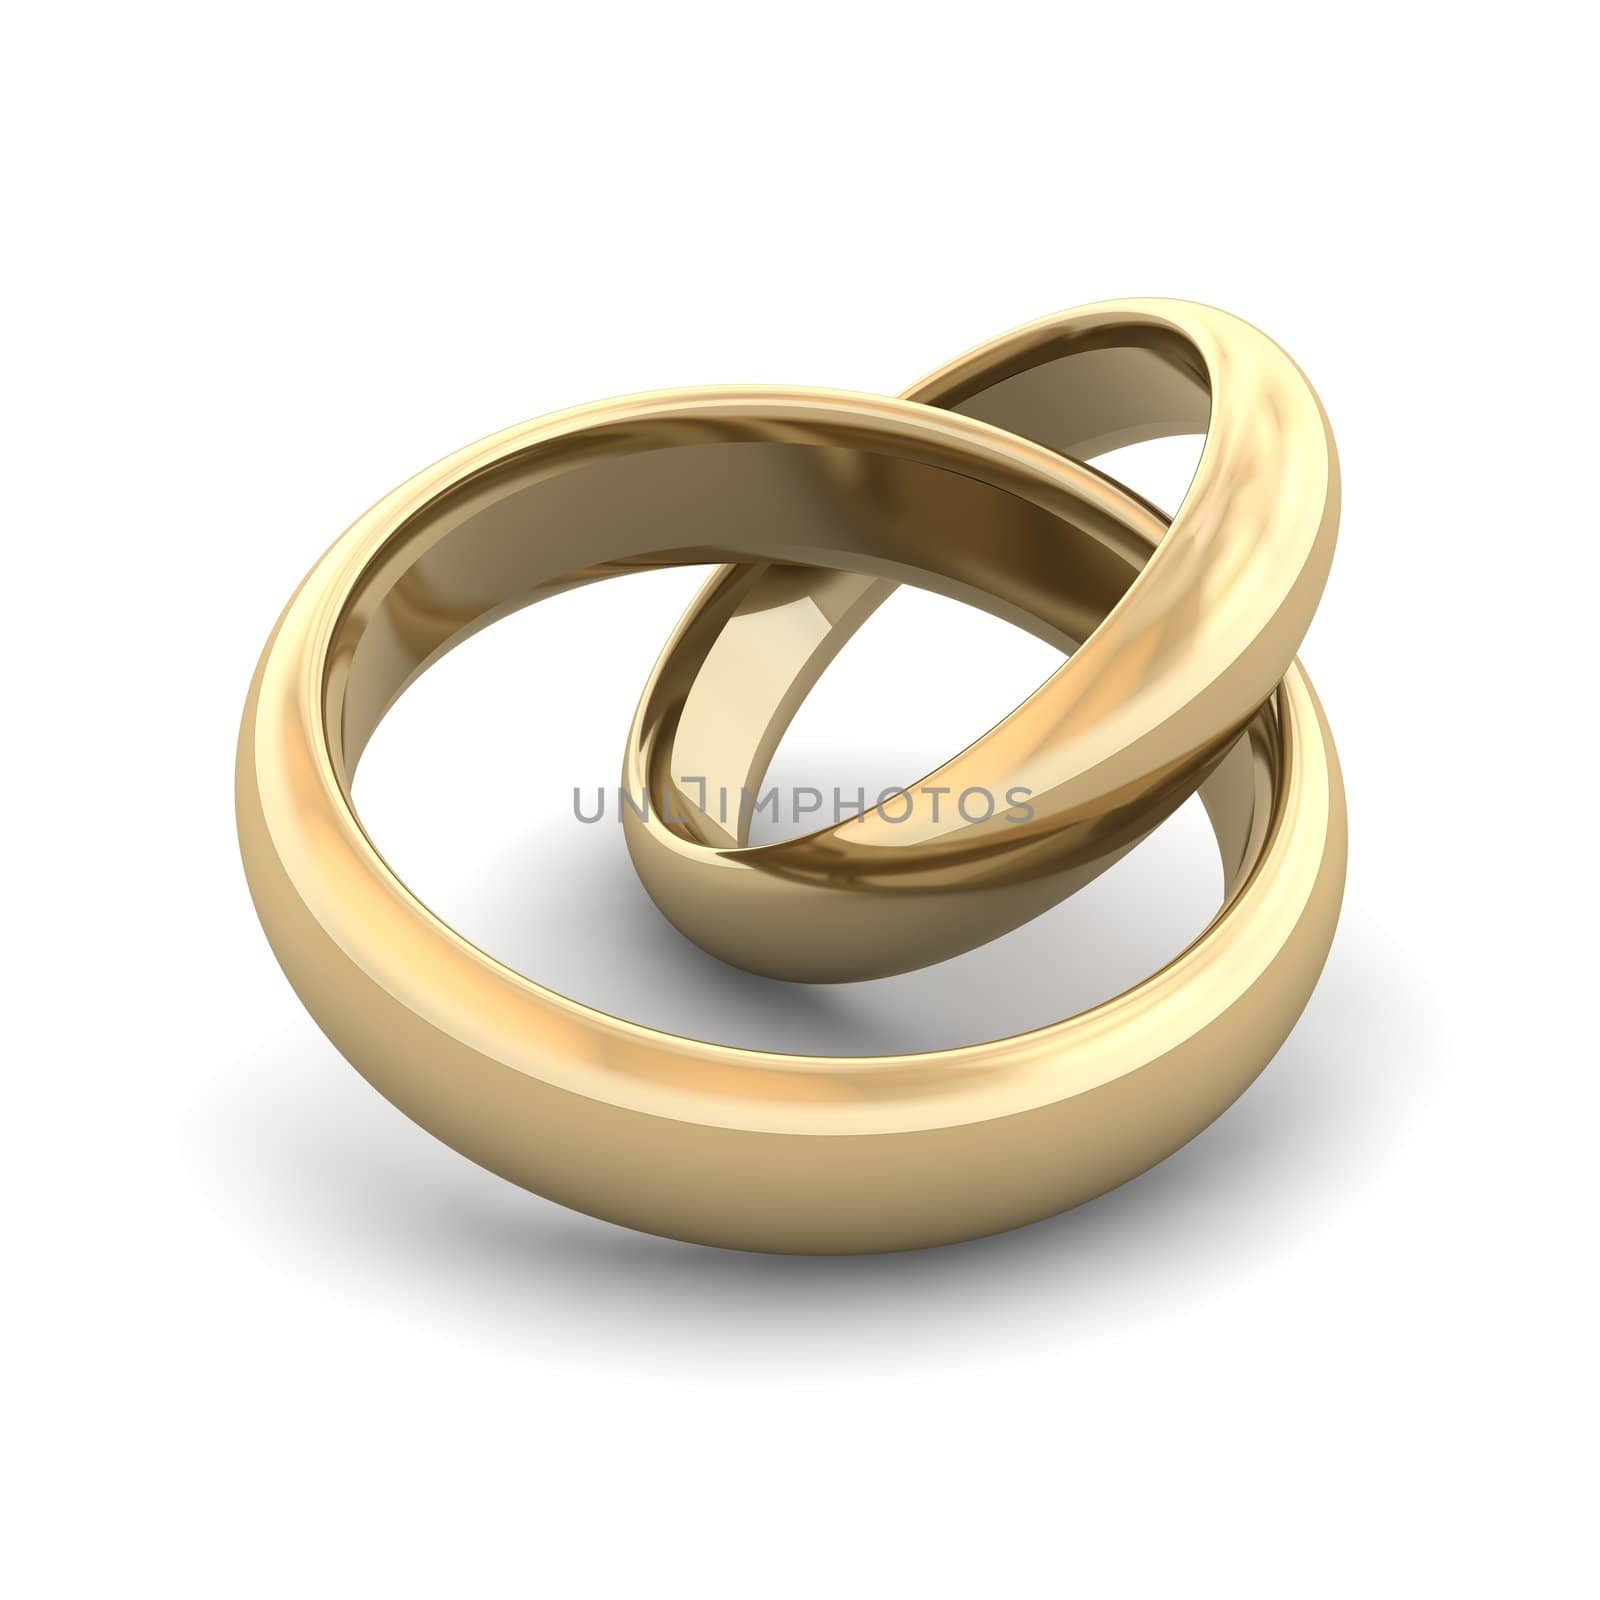 Golden wedding rings. 3d rendered illustration.